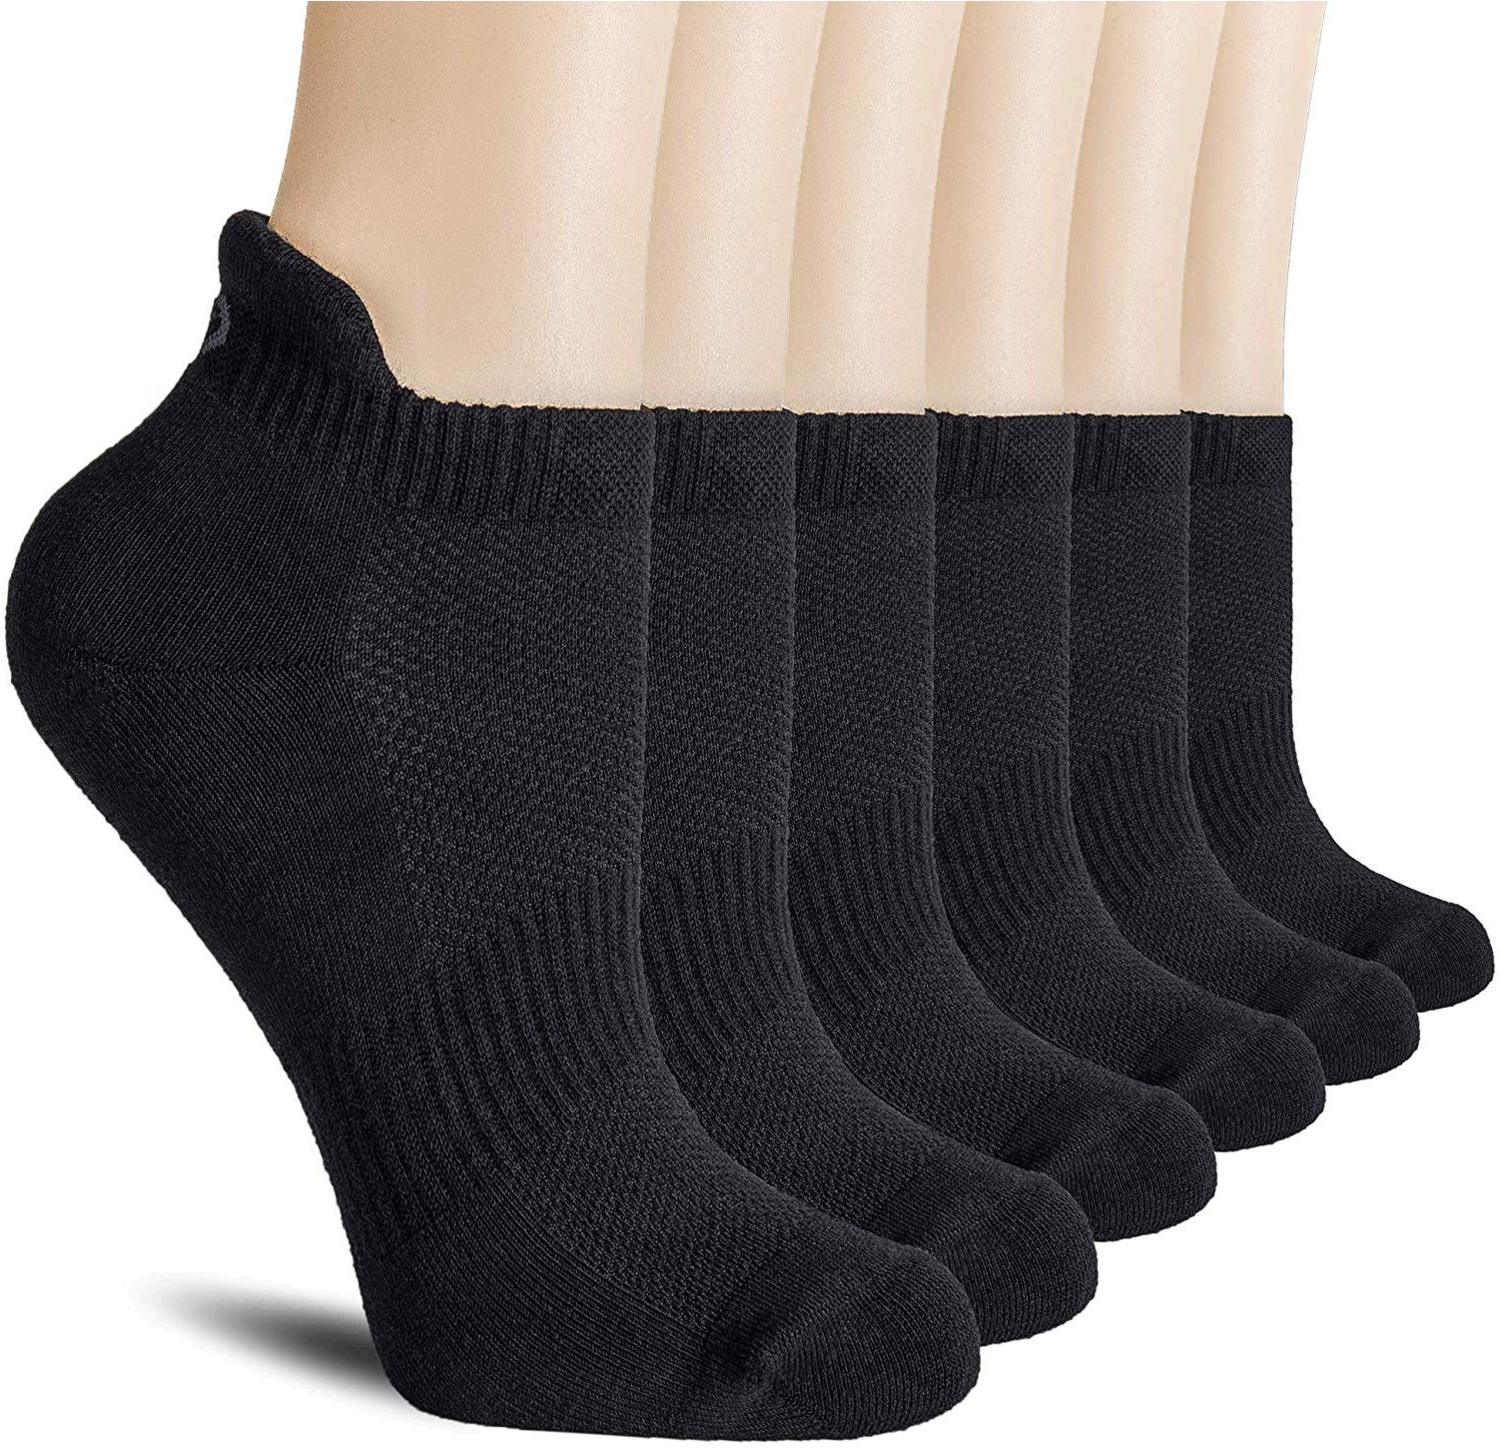 CelerSport Ankle Athletic Running Socks Low Cut Sport Tab, Black, Size Medium Xt eBay